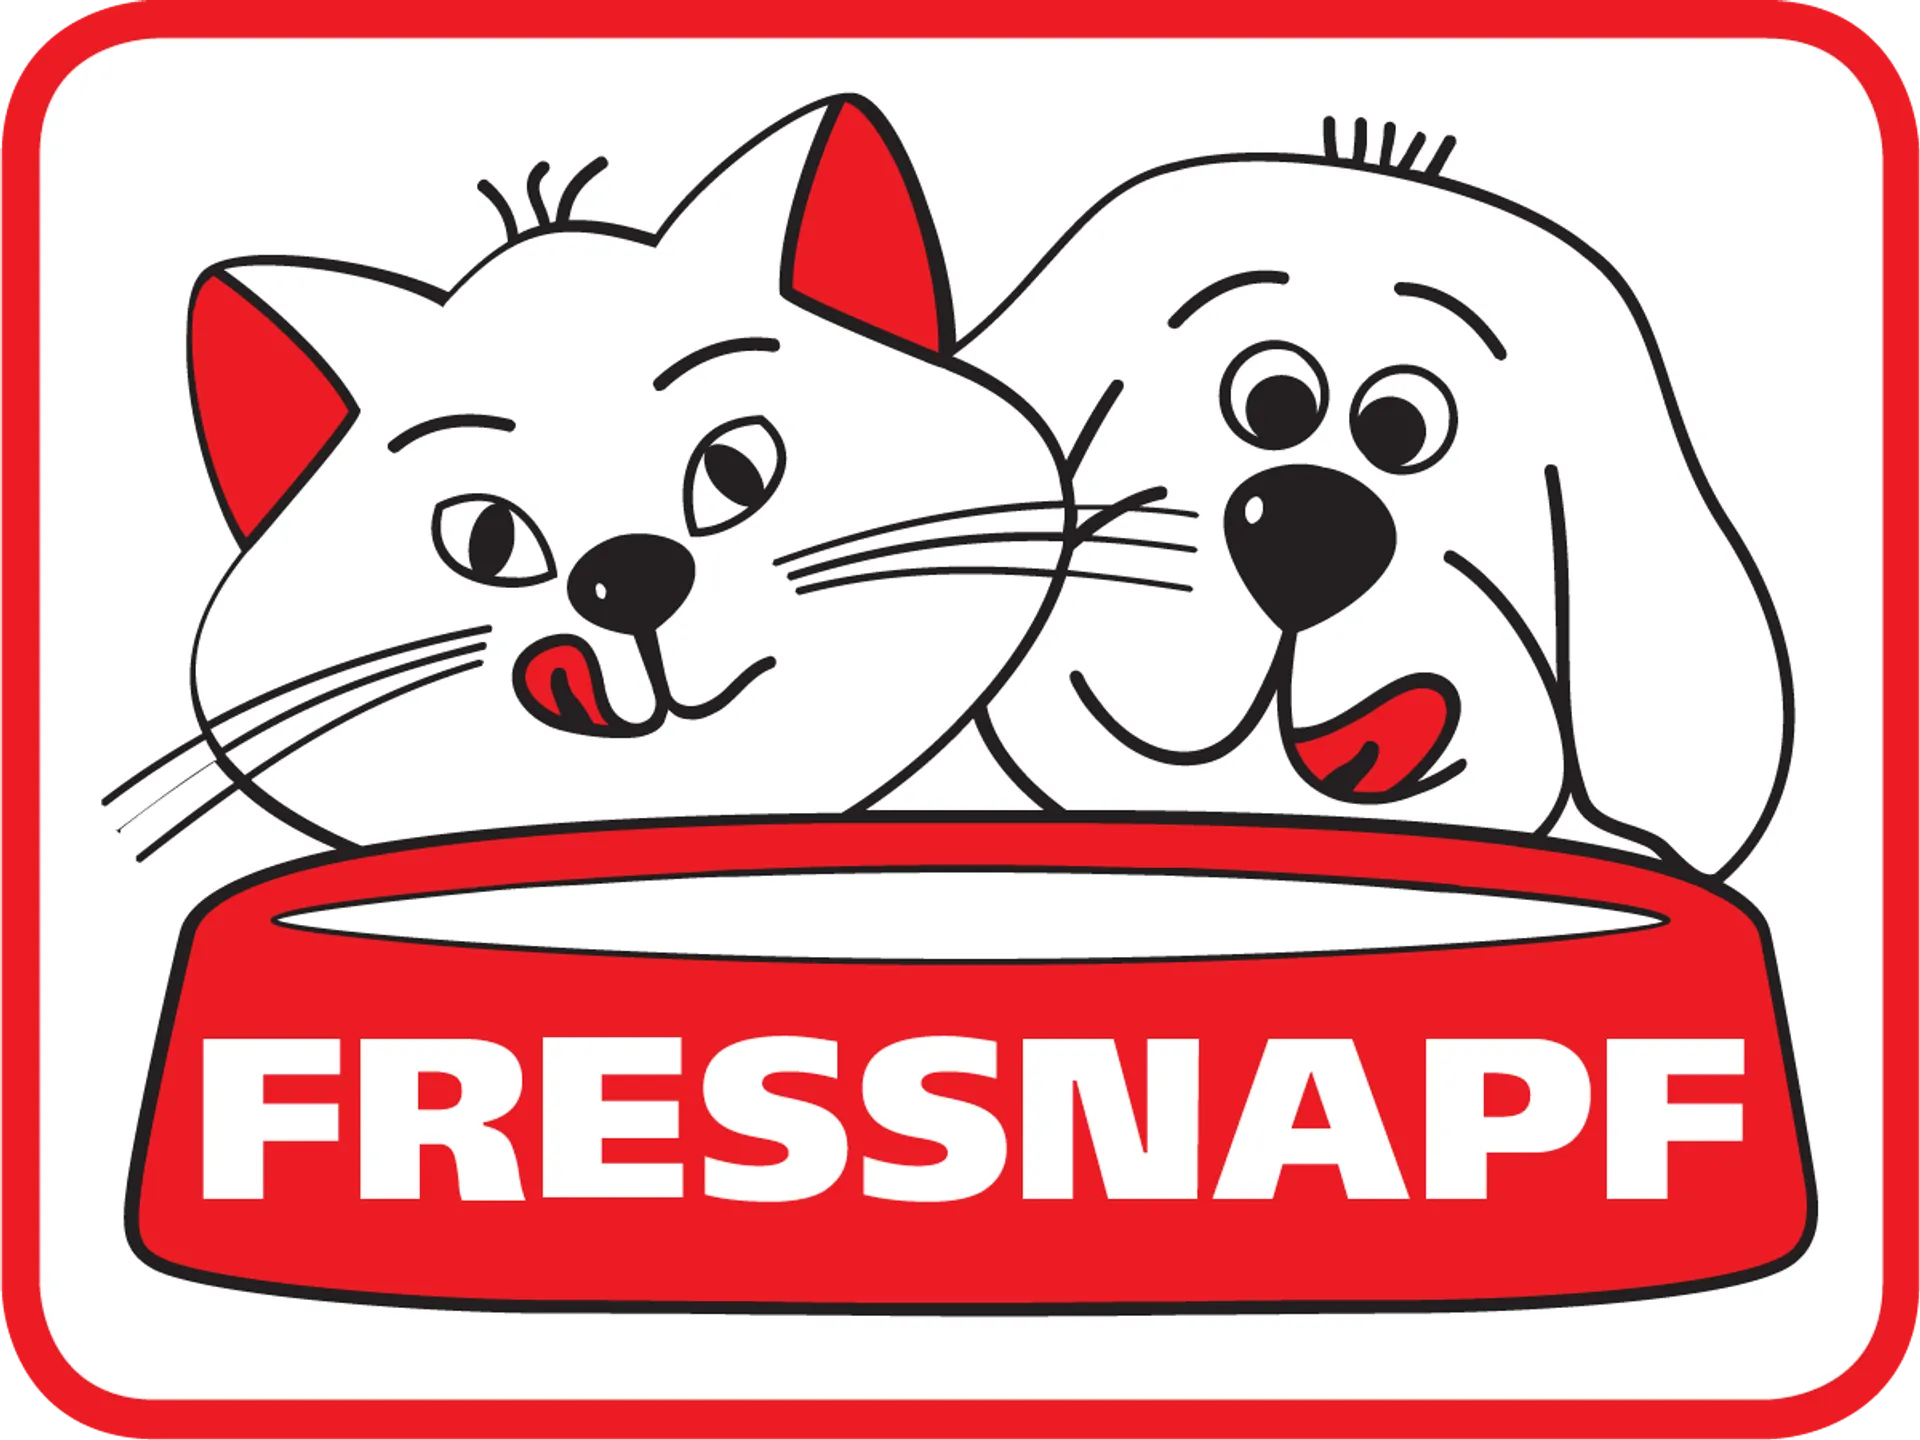 FRESSNAPF logo